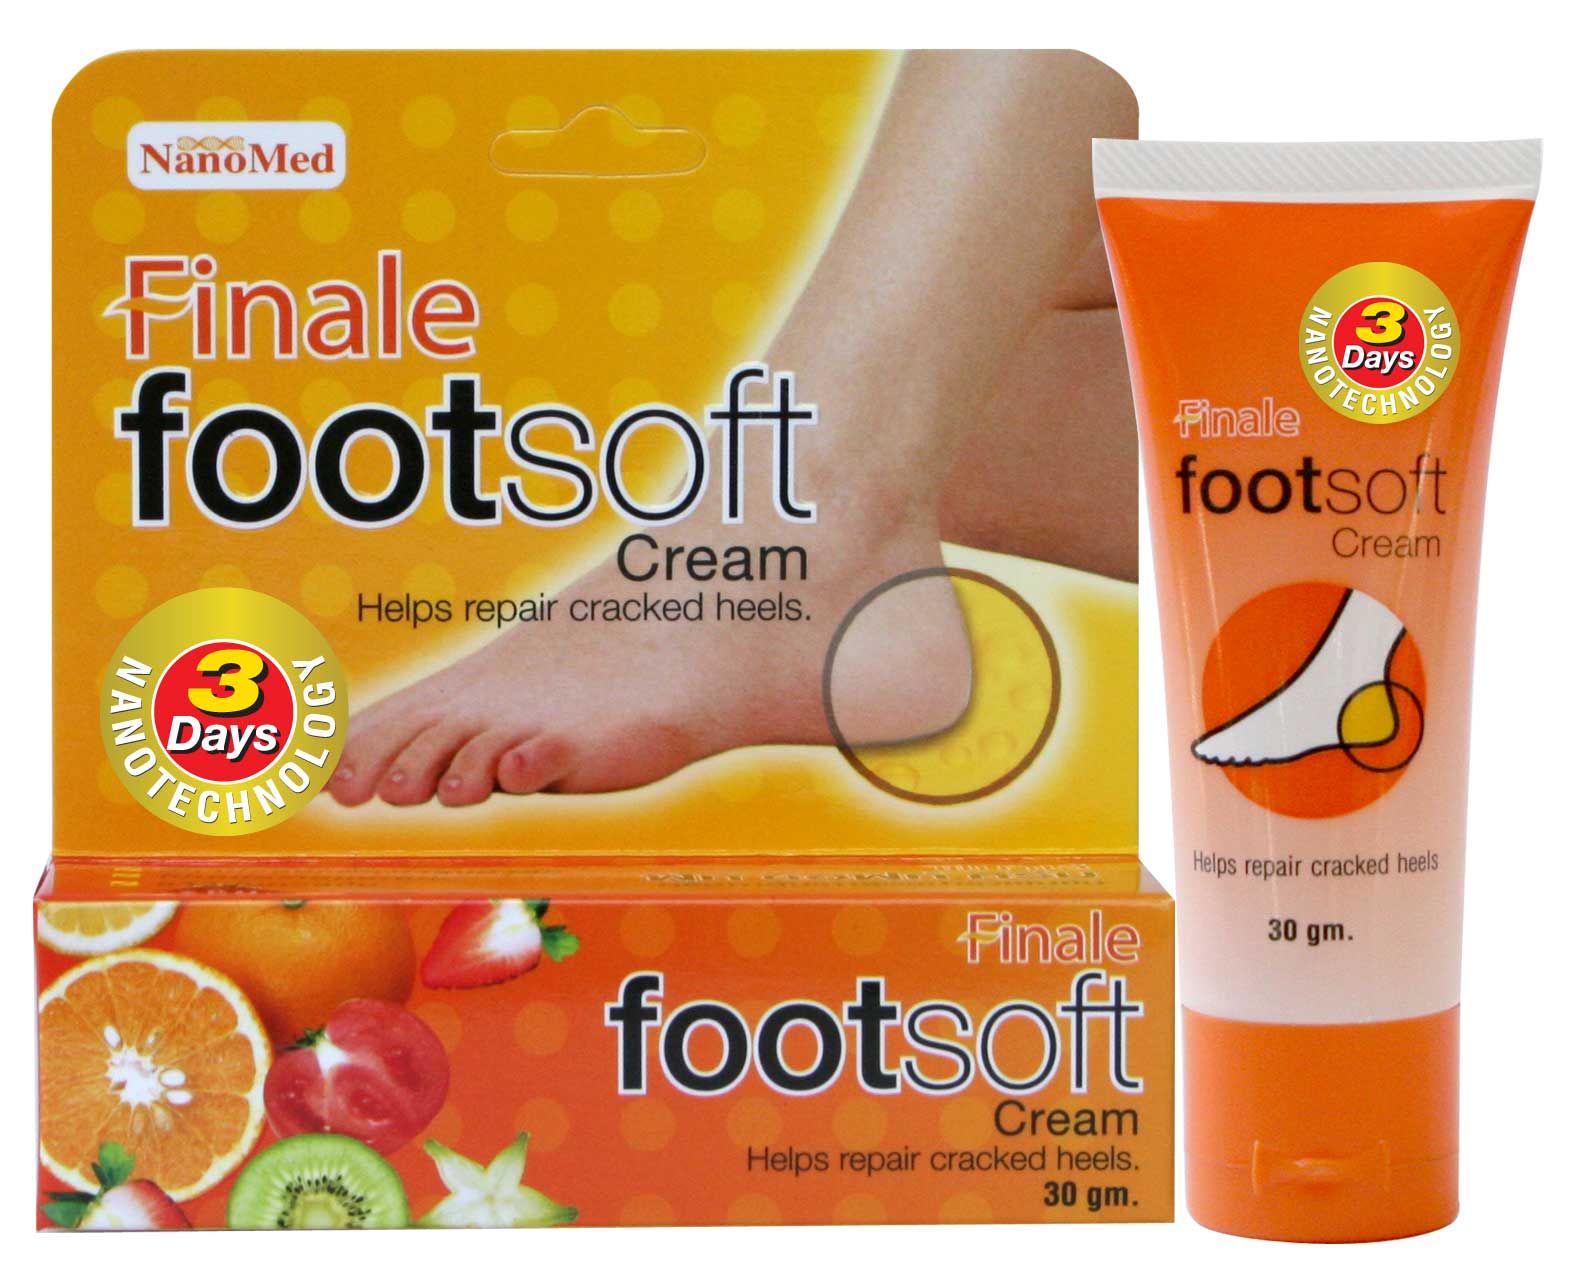 Finale Footsoft cream